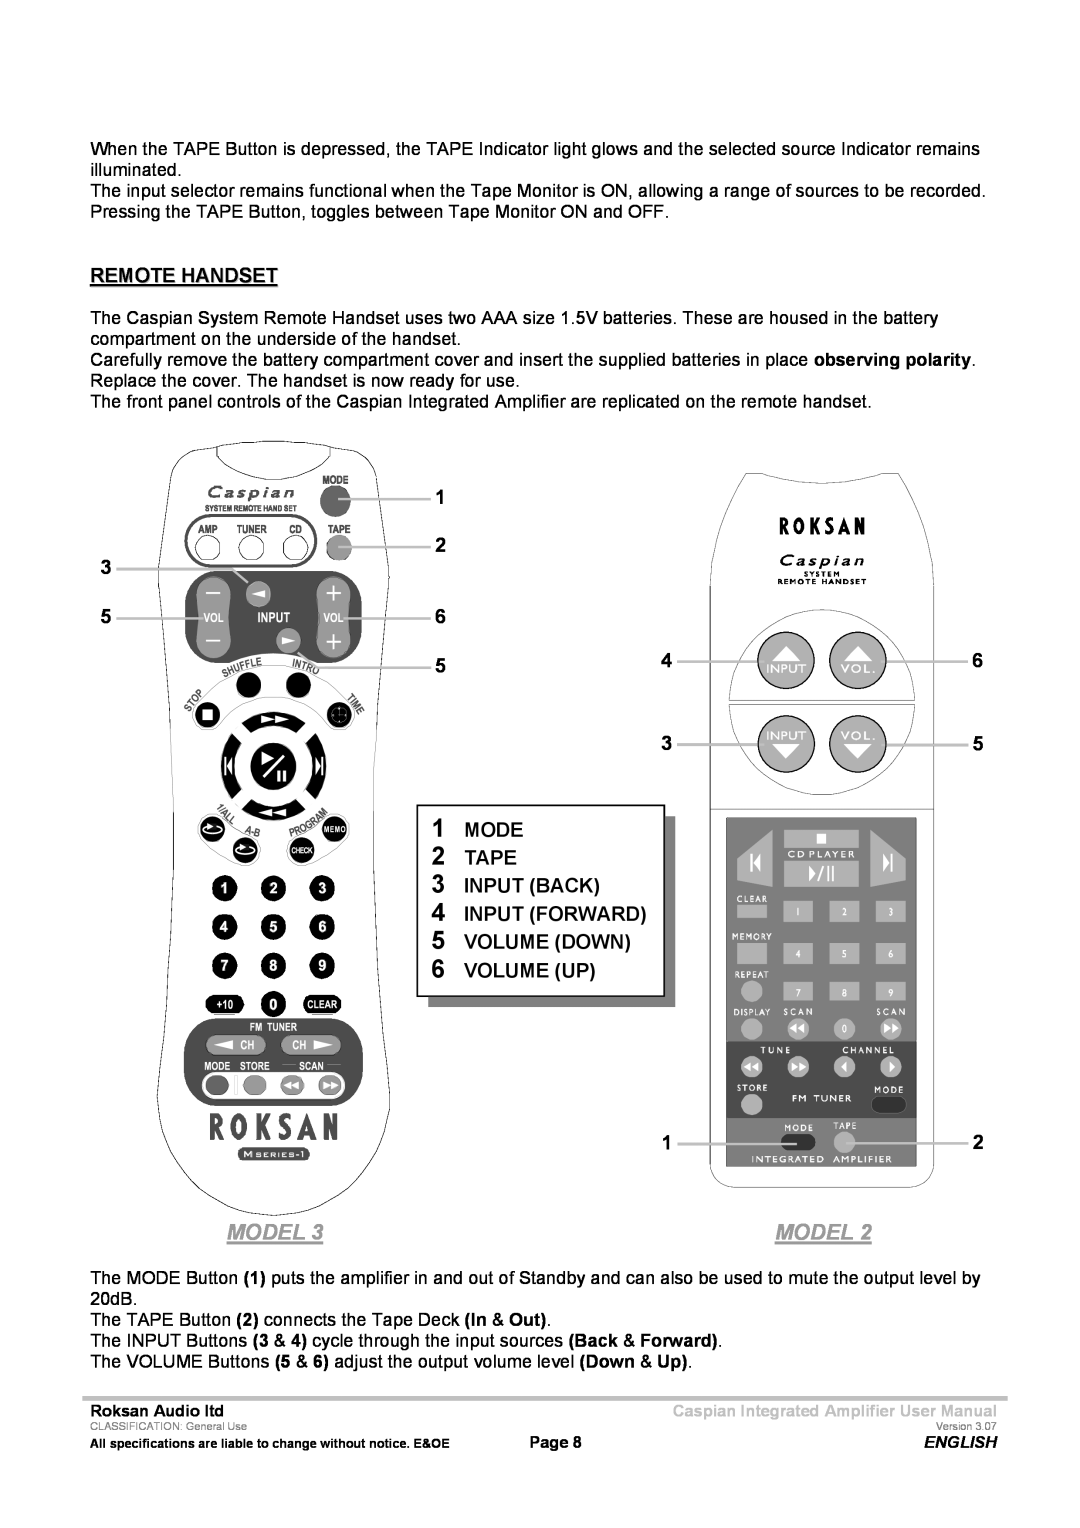 Roksan Audio M series -1 Model, Remote Handset, 3 1 MODE 2 TAPE 3 INPUT BACK 4 INPUT FORWARD, VOLUME DOWN 6 VOLUME UP 